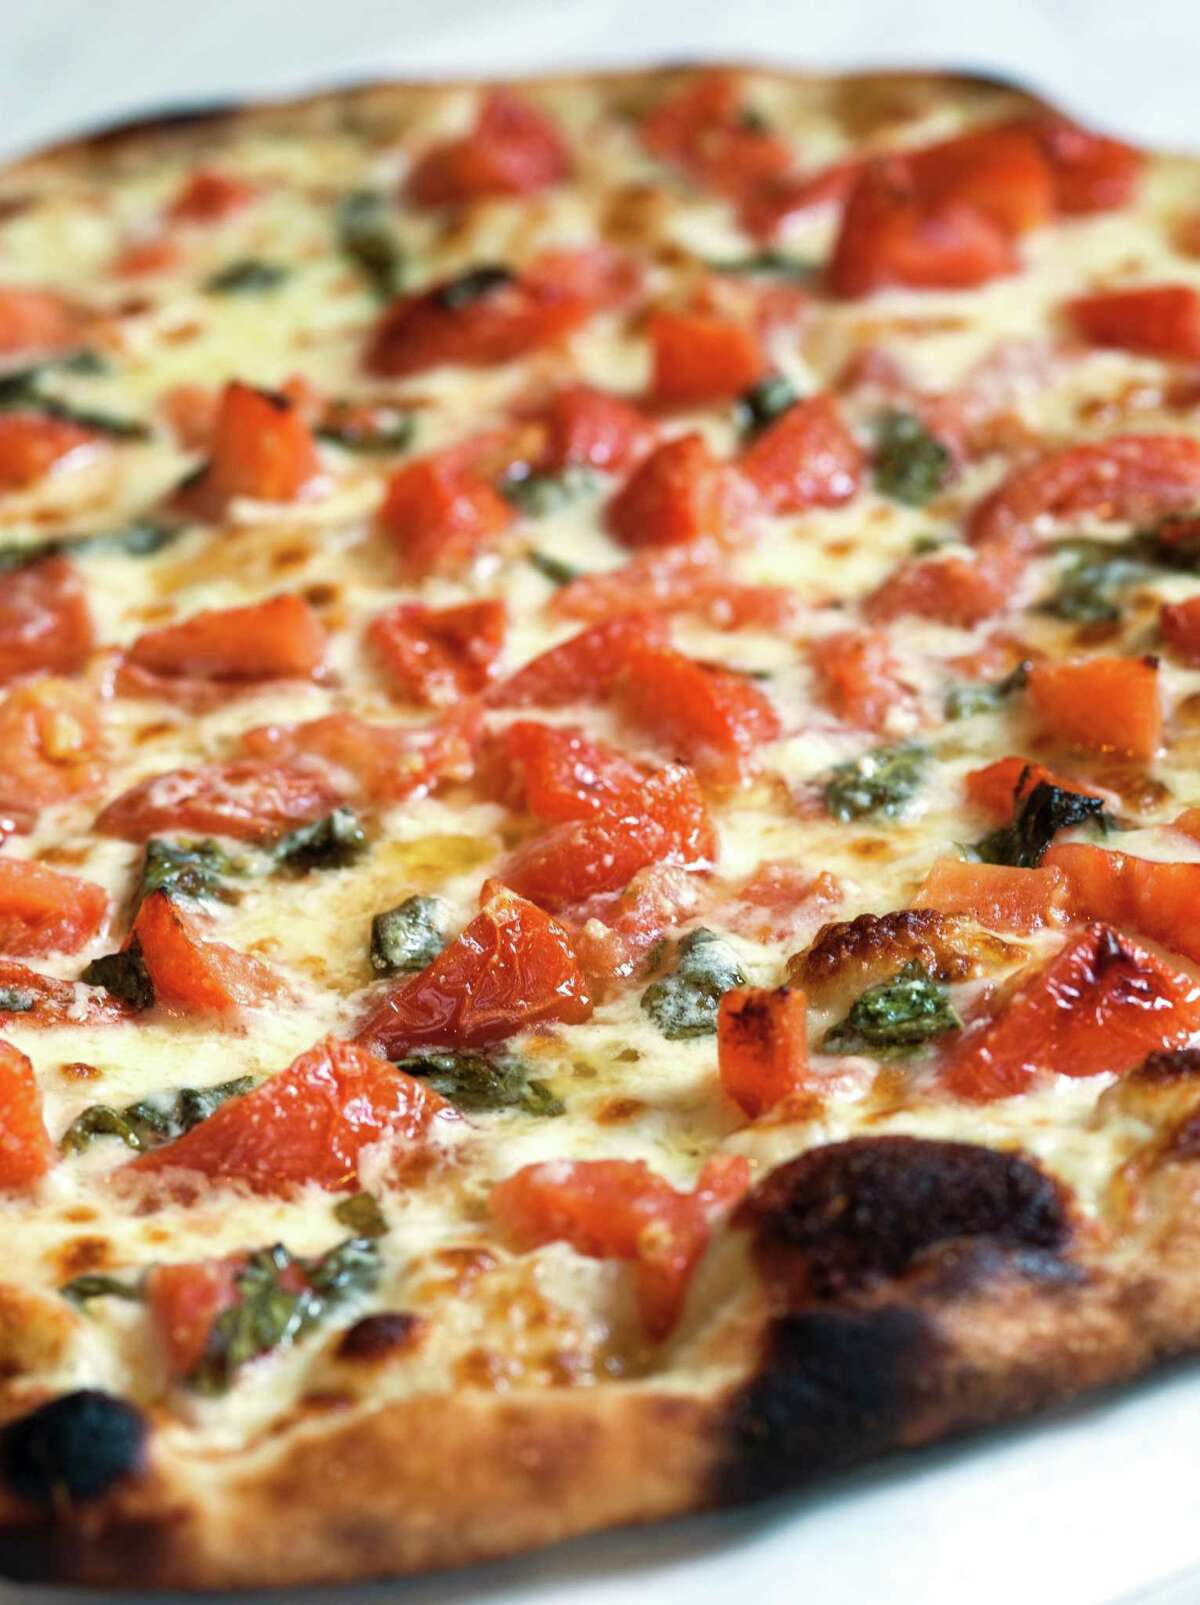 Frank Pepe Pizzeria Napoletana is bringing back the fresh tomato pie for summer 2021.